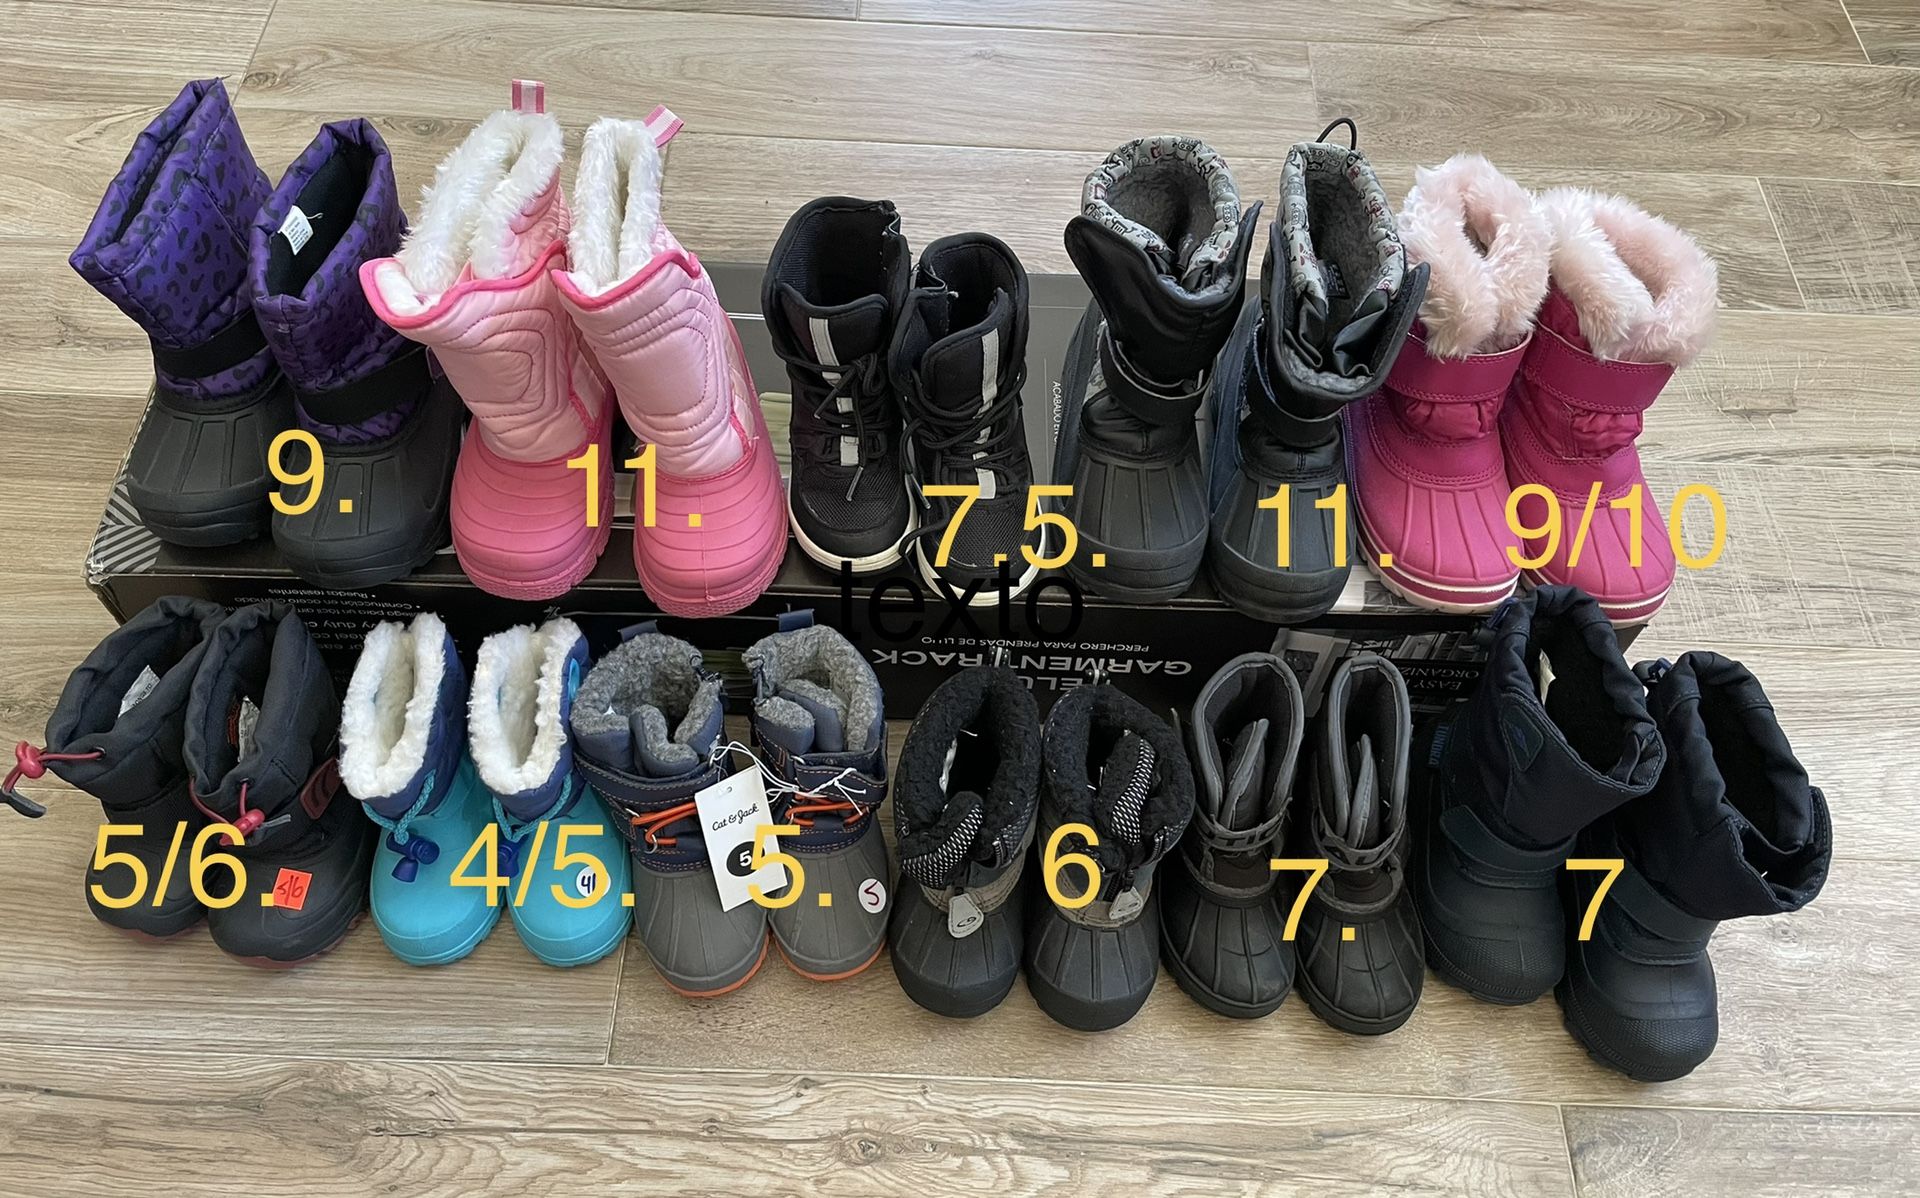 Snow Boots Kids Size $15 Each 